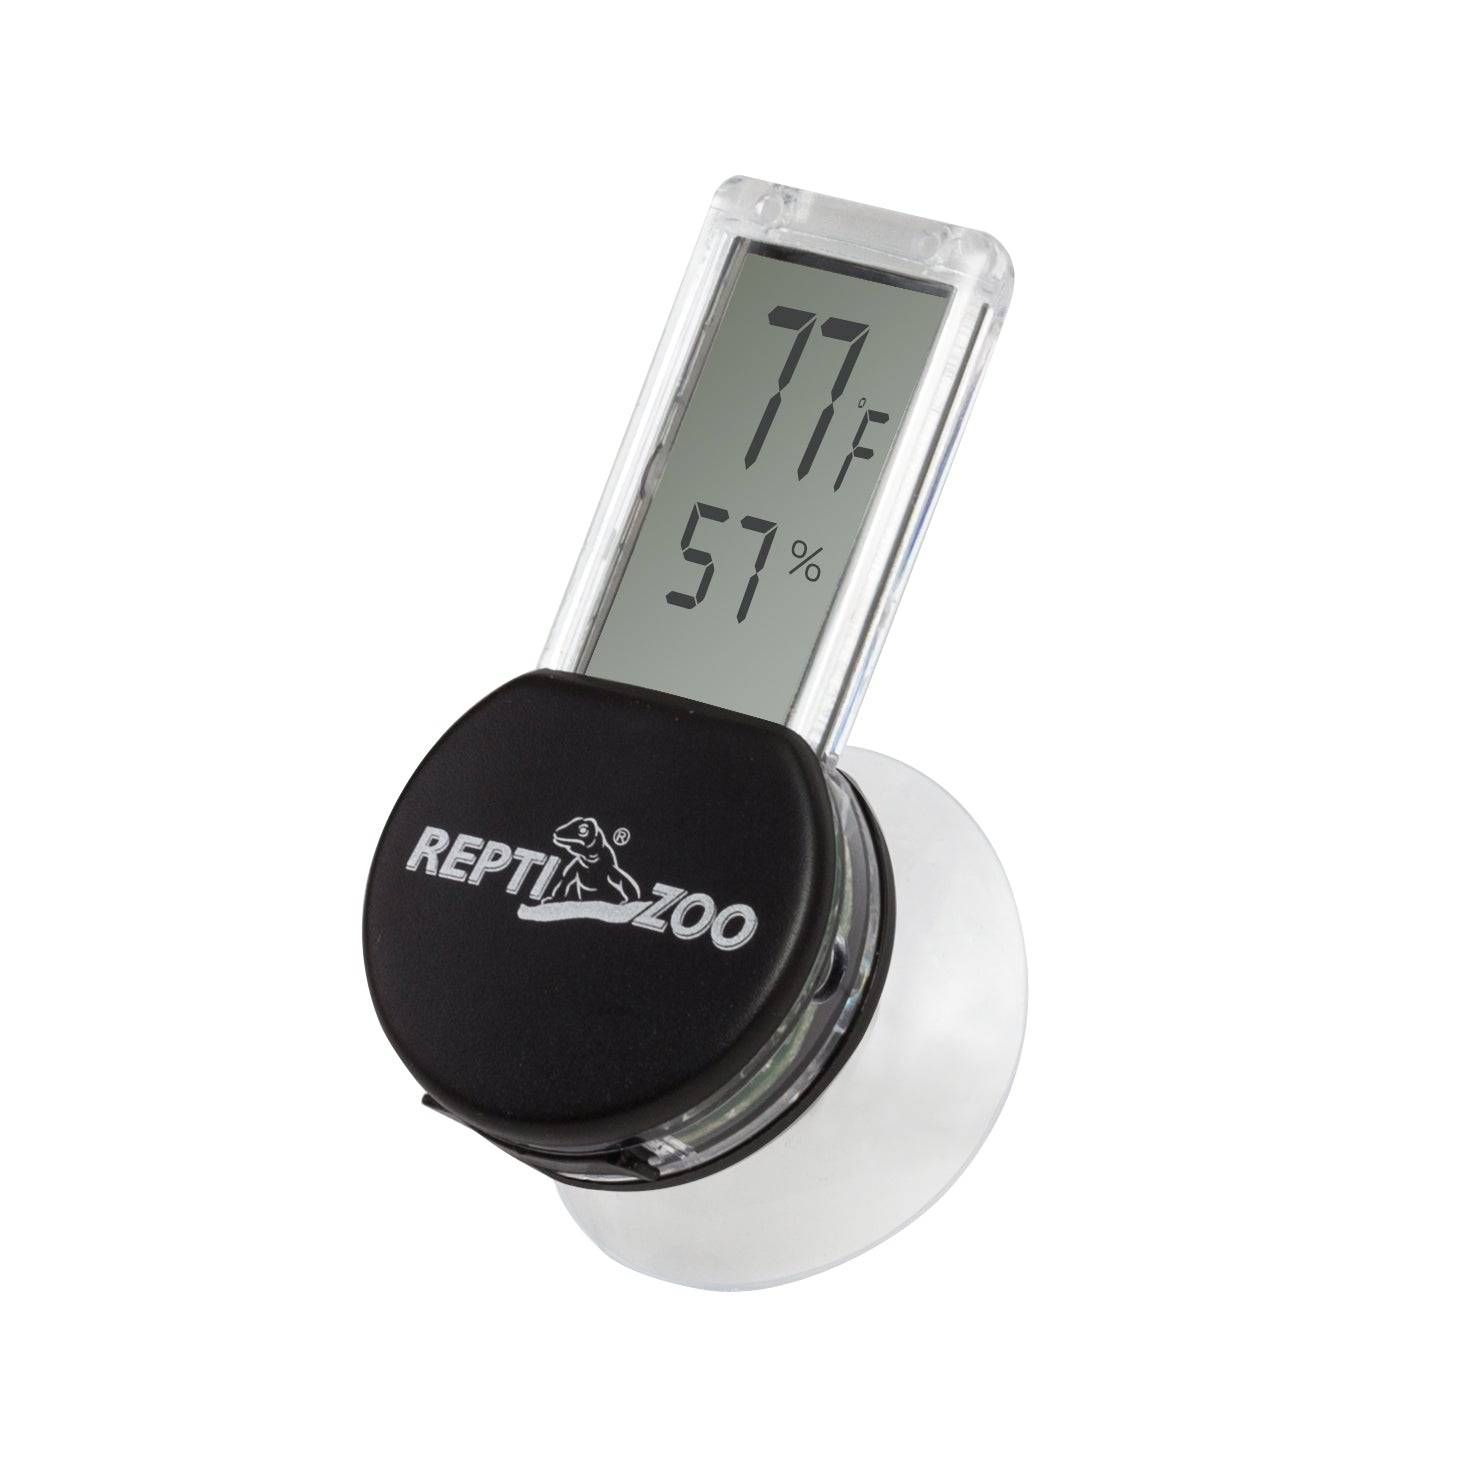 REPTIZOO - Digital Simple Rotation Thermostat 1200w max (THC24)